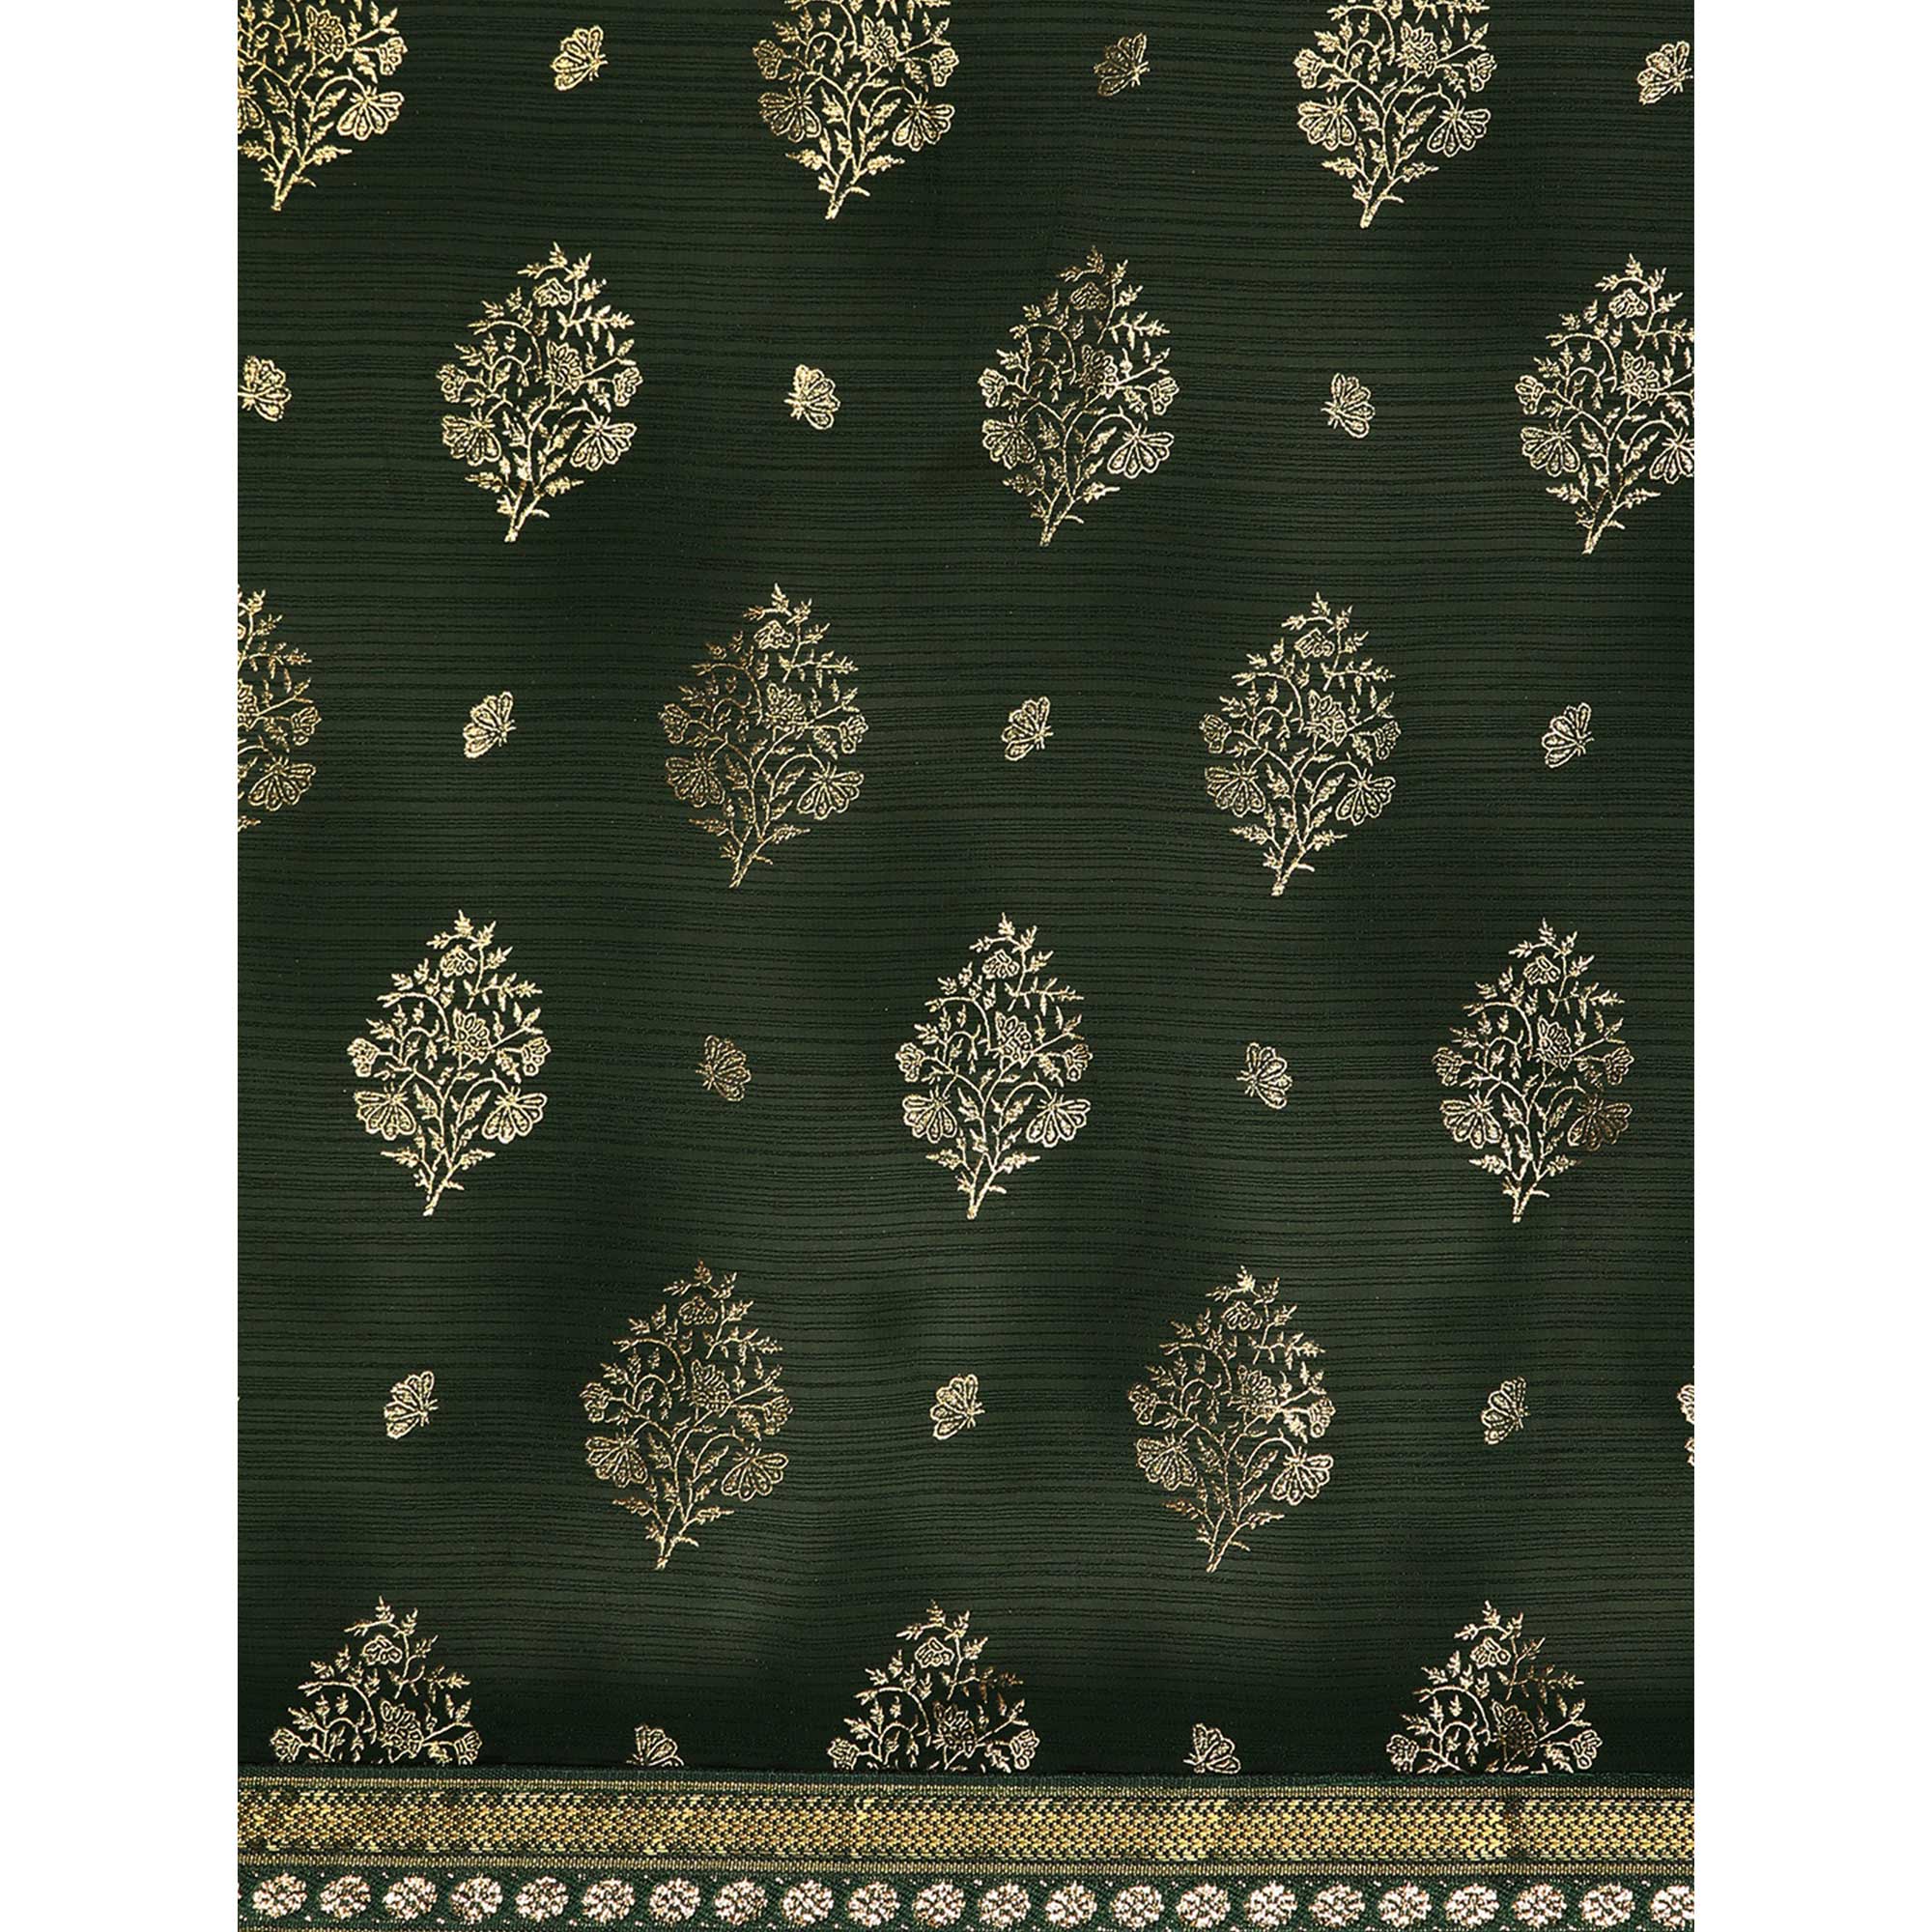 Green Floral Foil Printed Chiffon Saree With Tassels